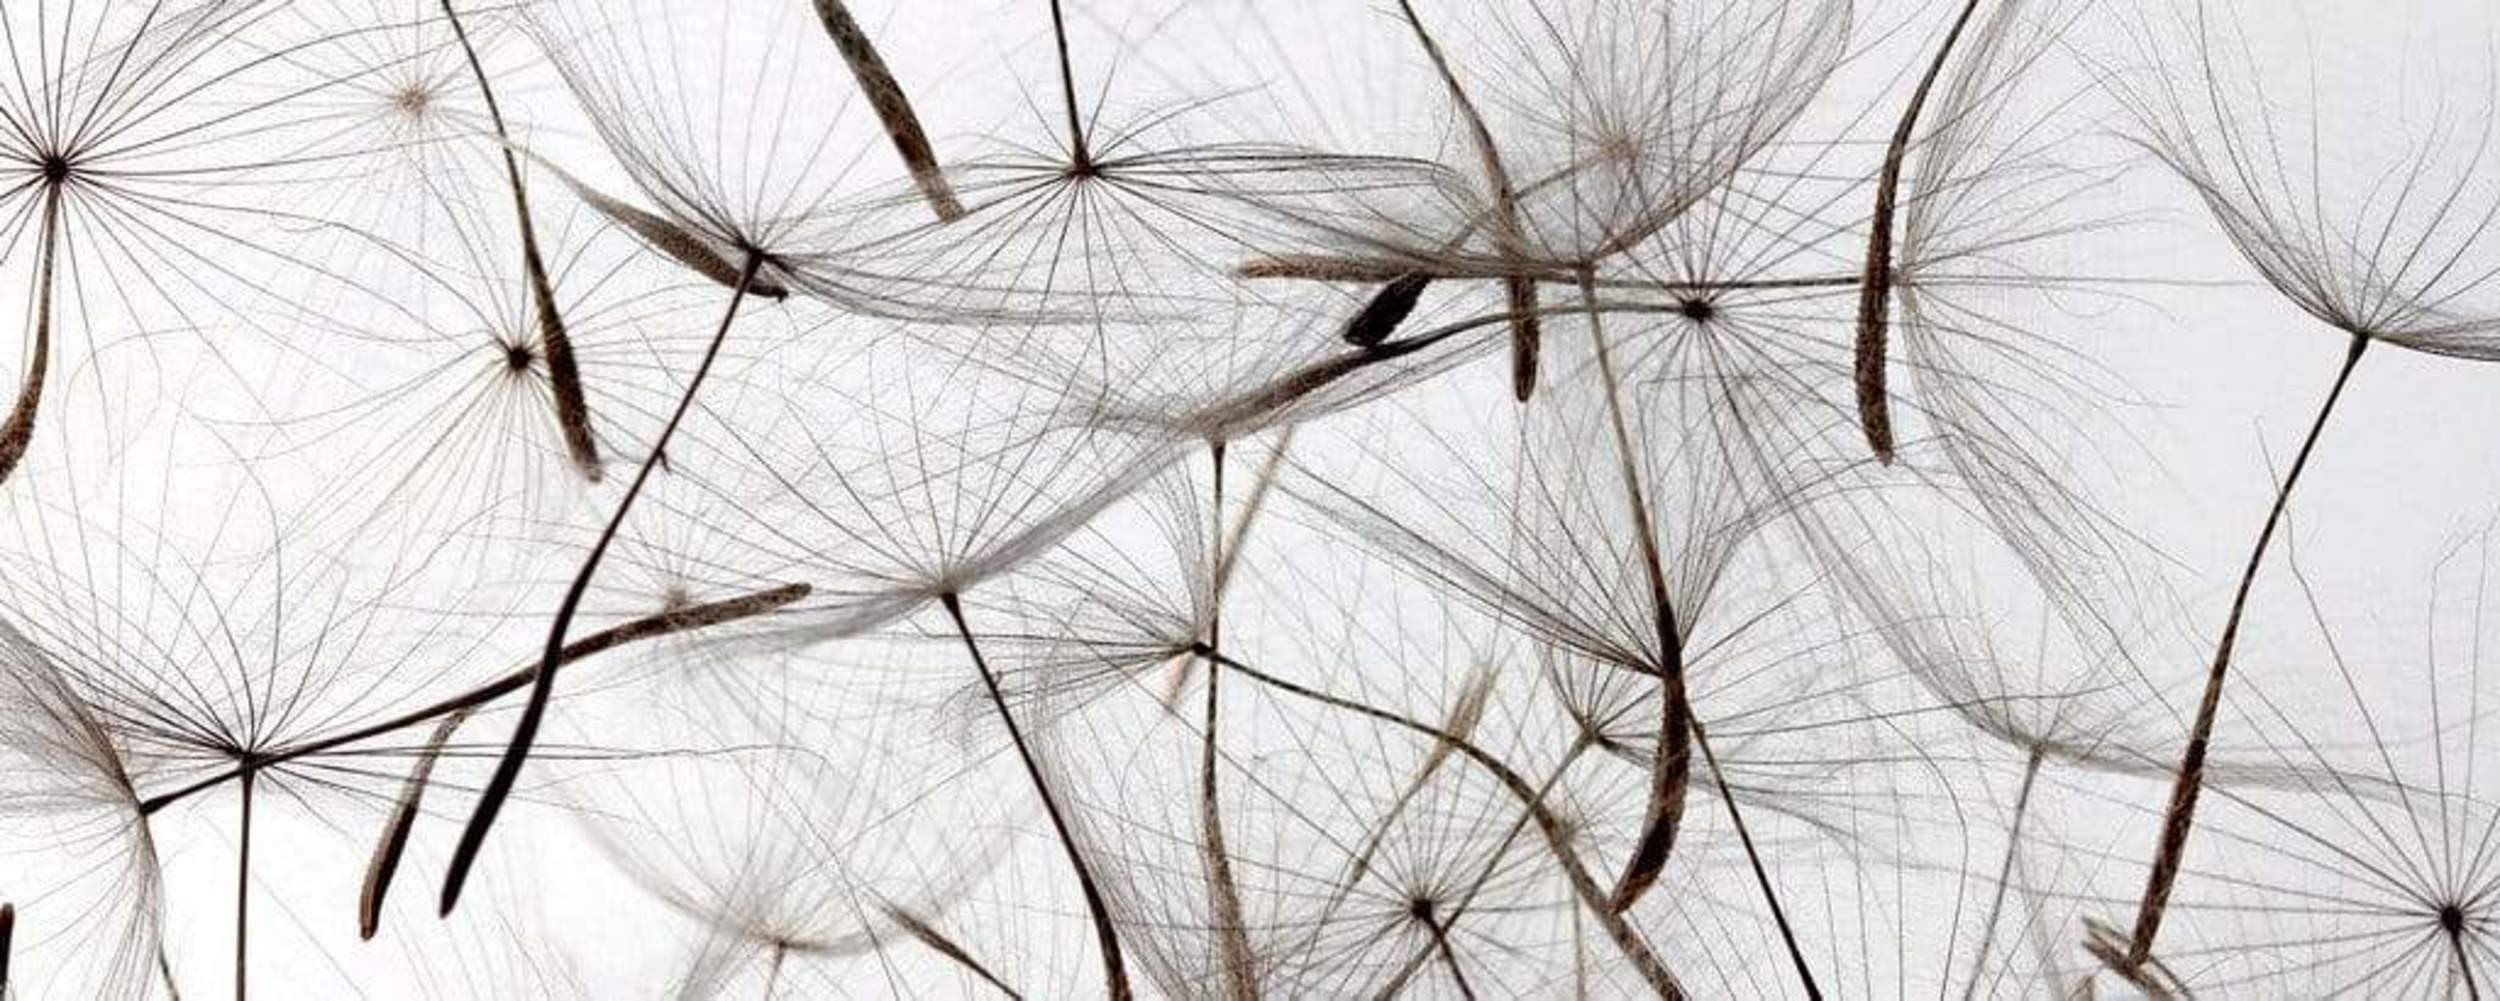 Fotobehang - Dandelion Seeds 375x150cm - Vliesbehang